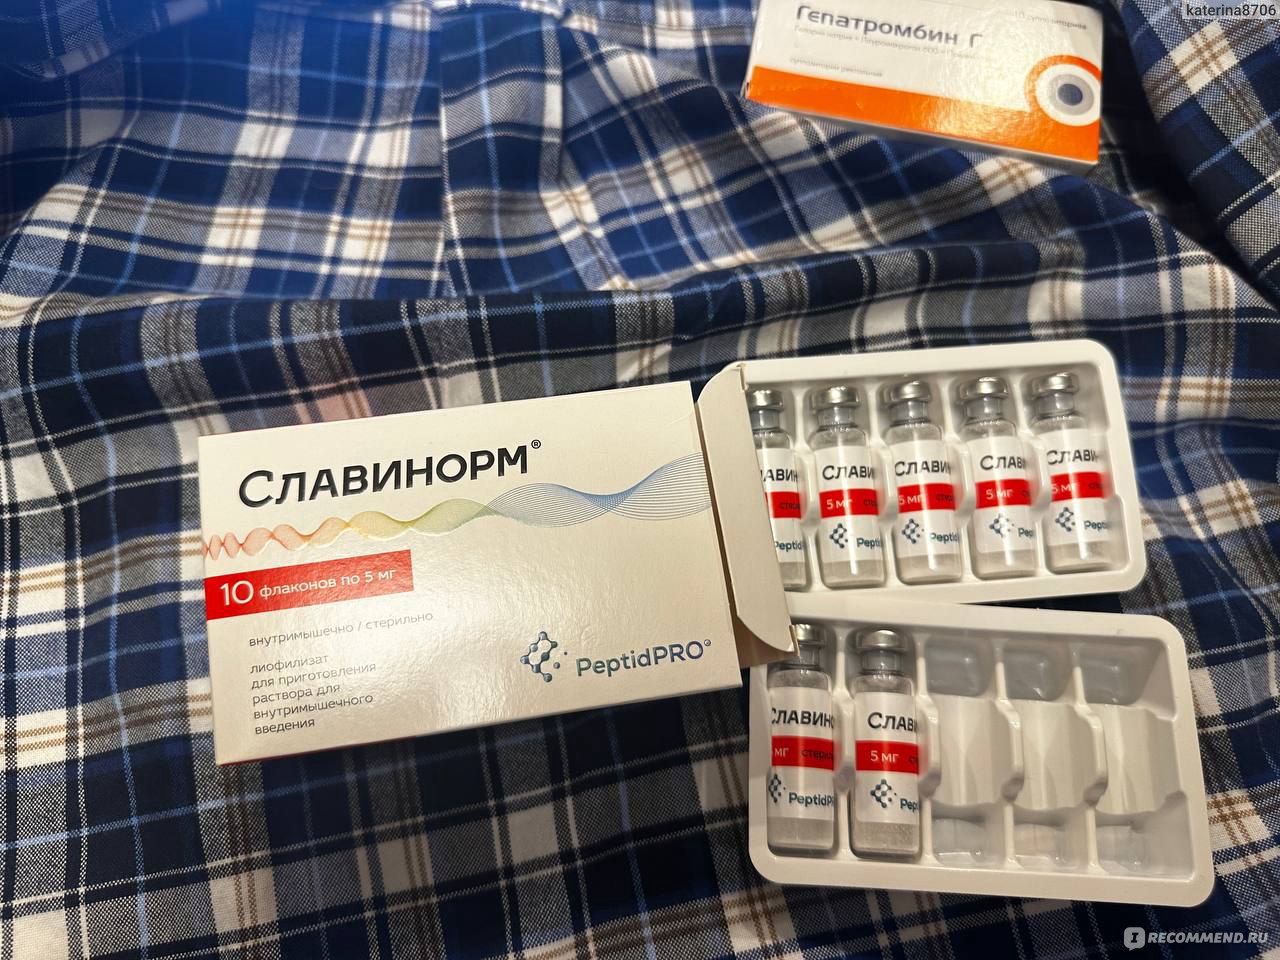 Лекарственный препарат PeptidPro Славинорм, внутримышечно - «Славинорм .